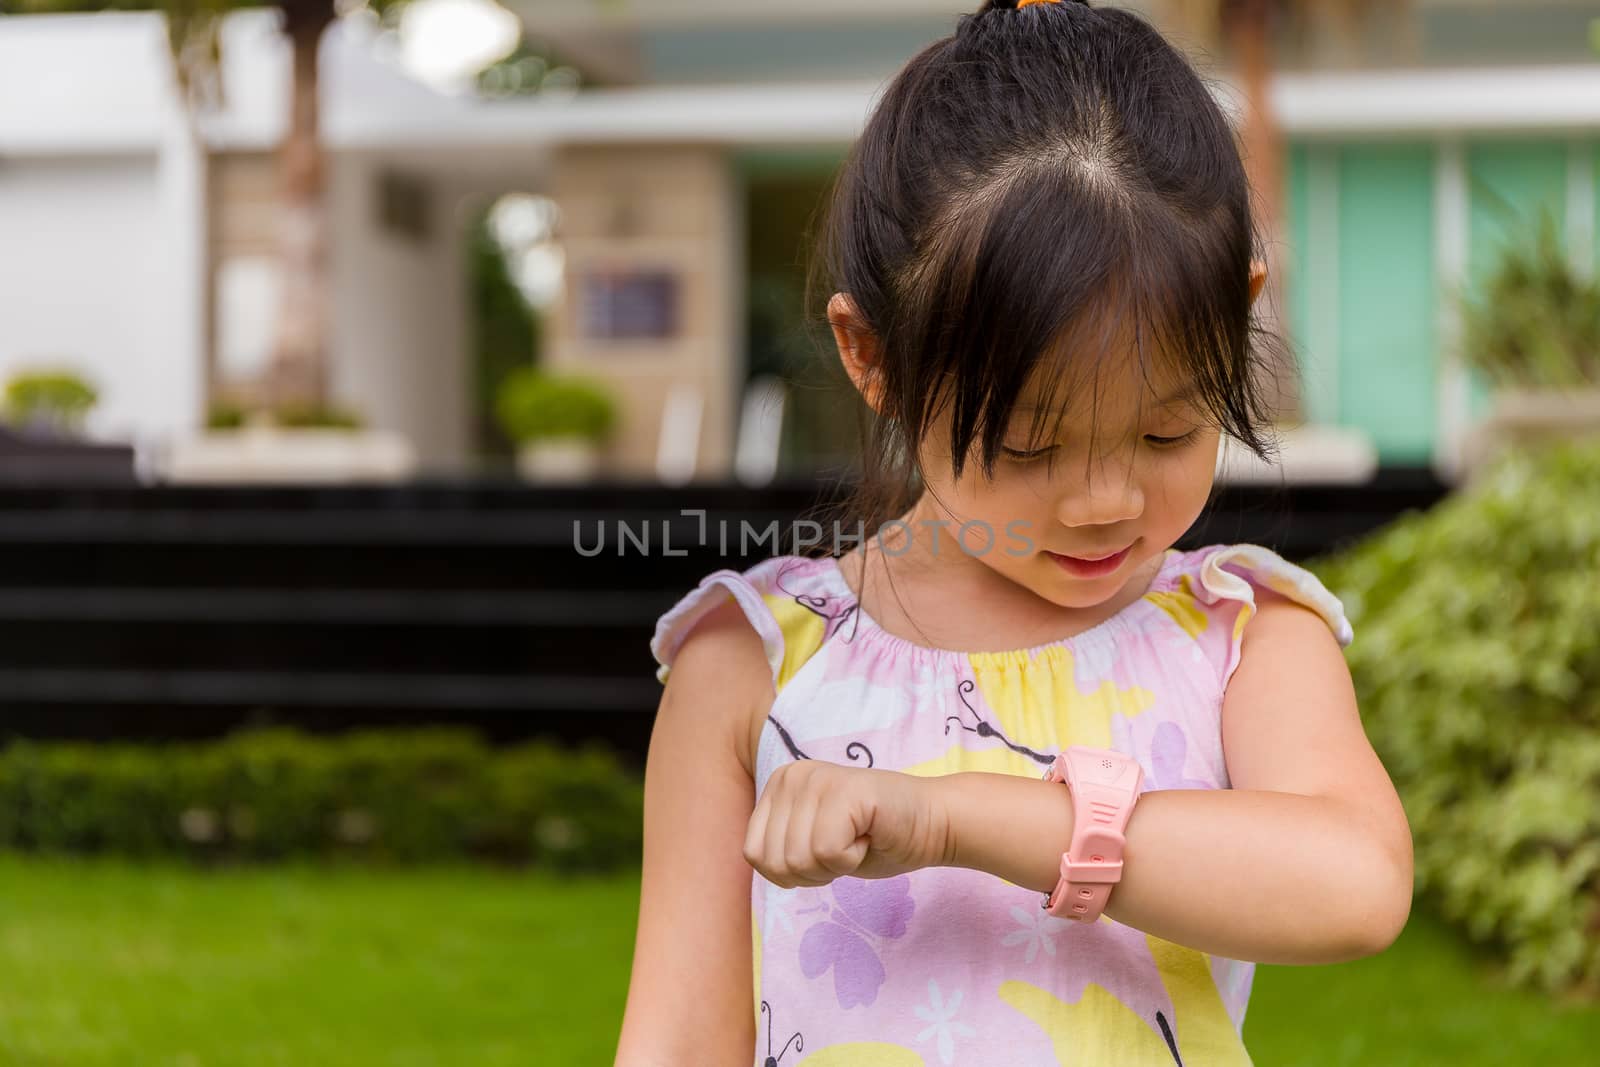 Child standing in garden using smartwatch or smart watch on her wrist.